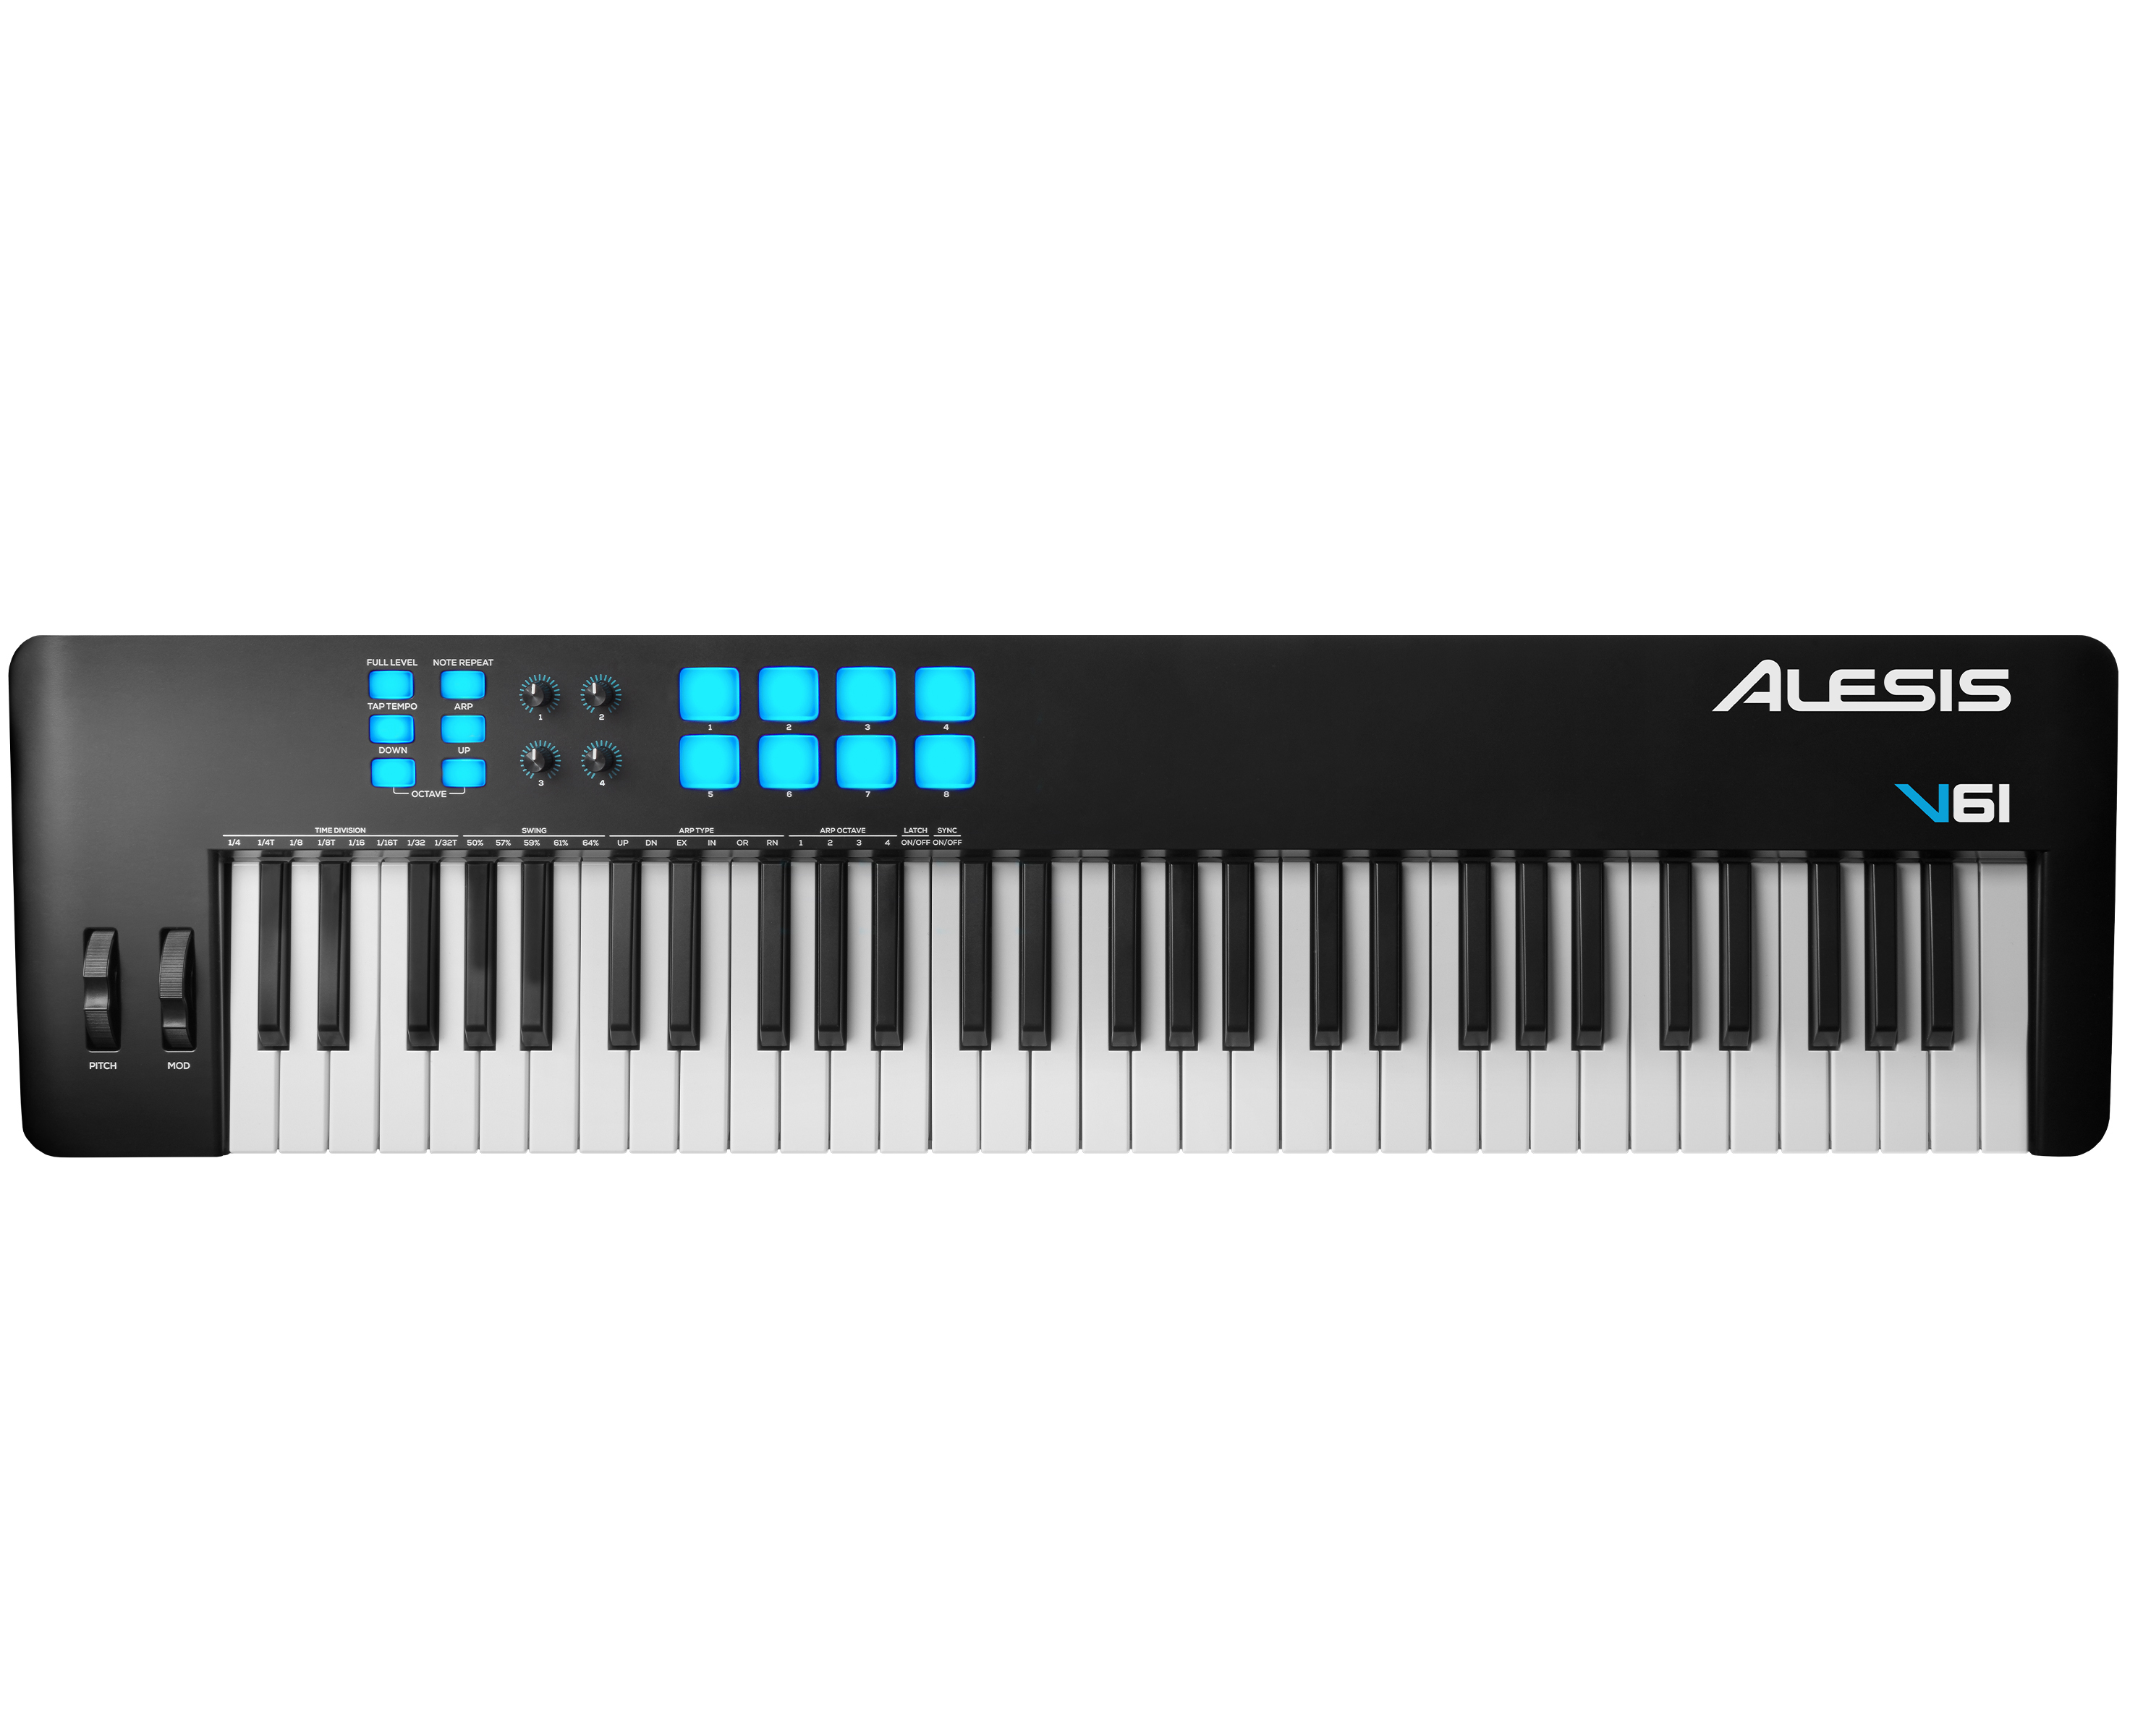 Køb Alesis v61 MKII MIDI keyboard - Pris 1249.00 kr.